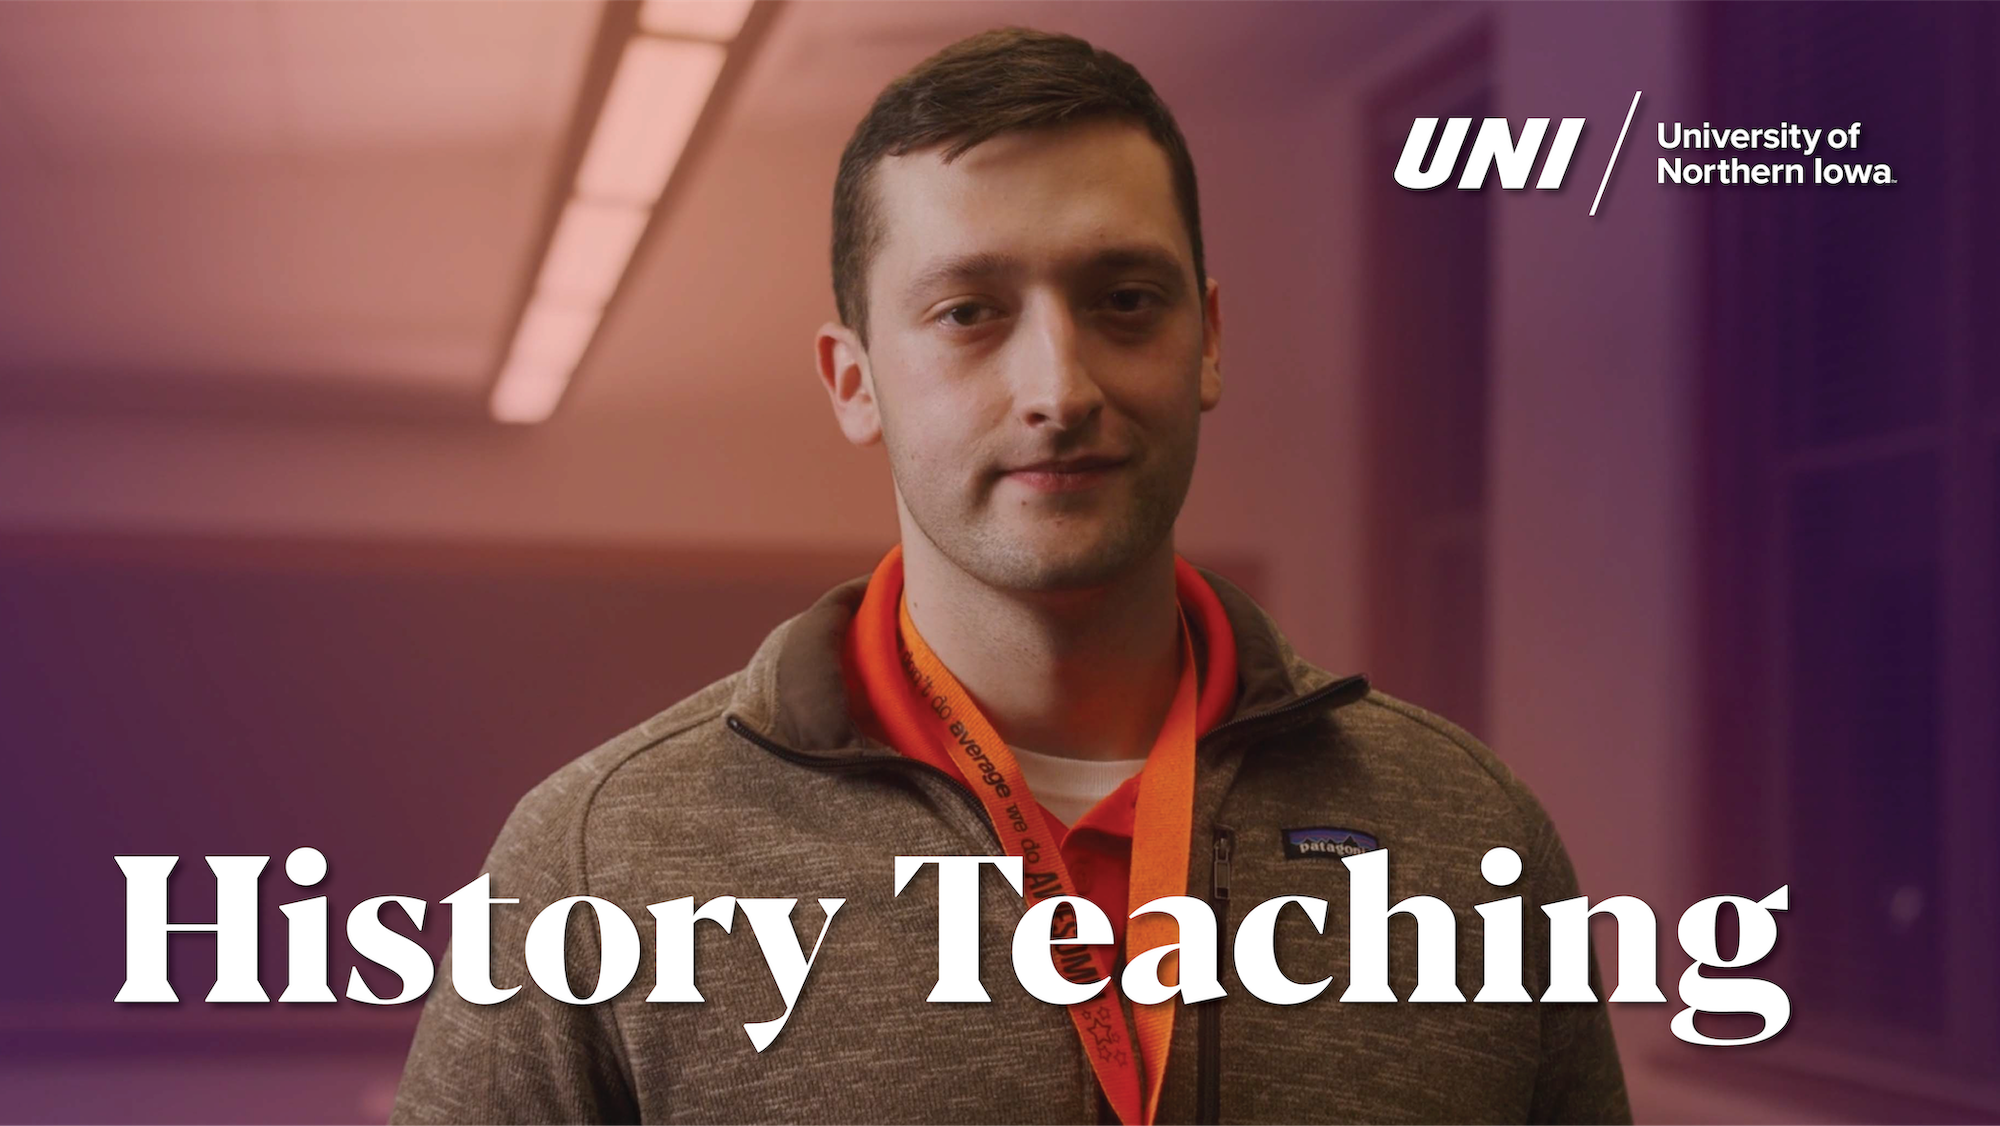 History Teaching video link